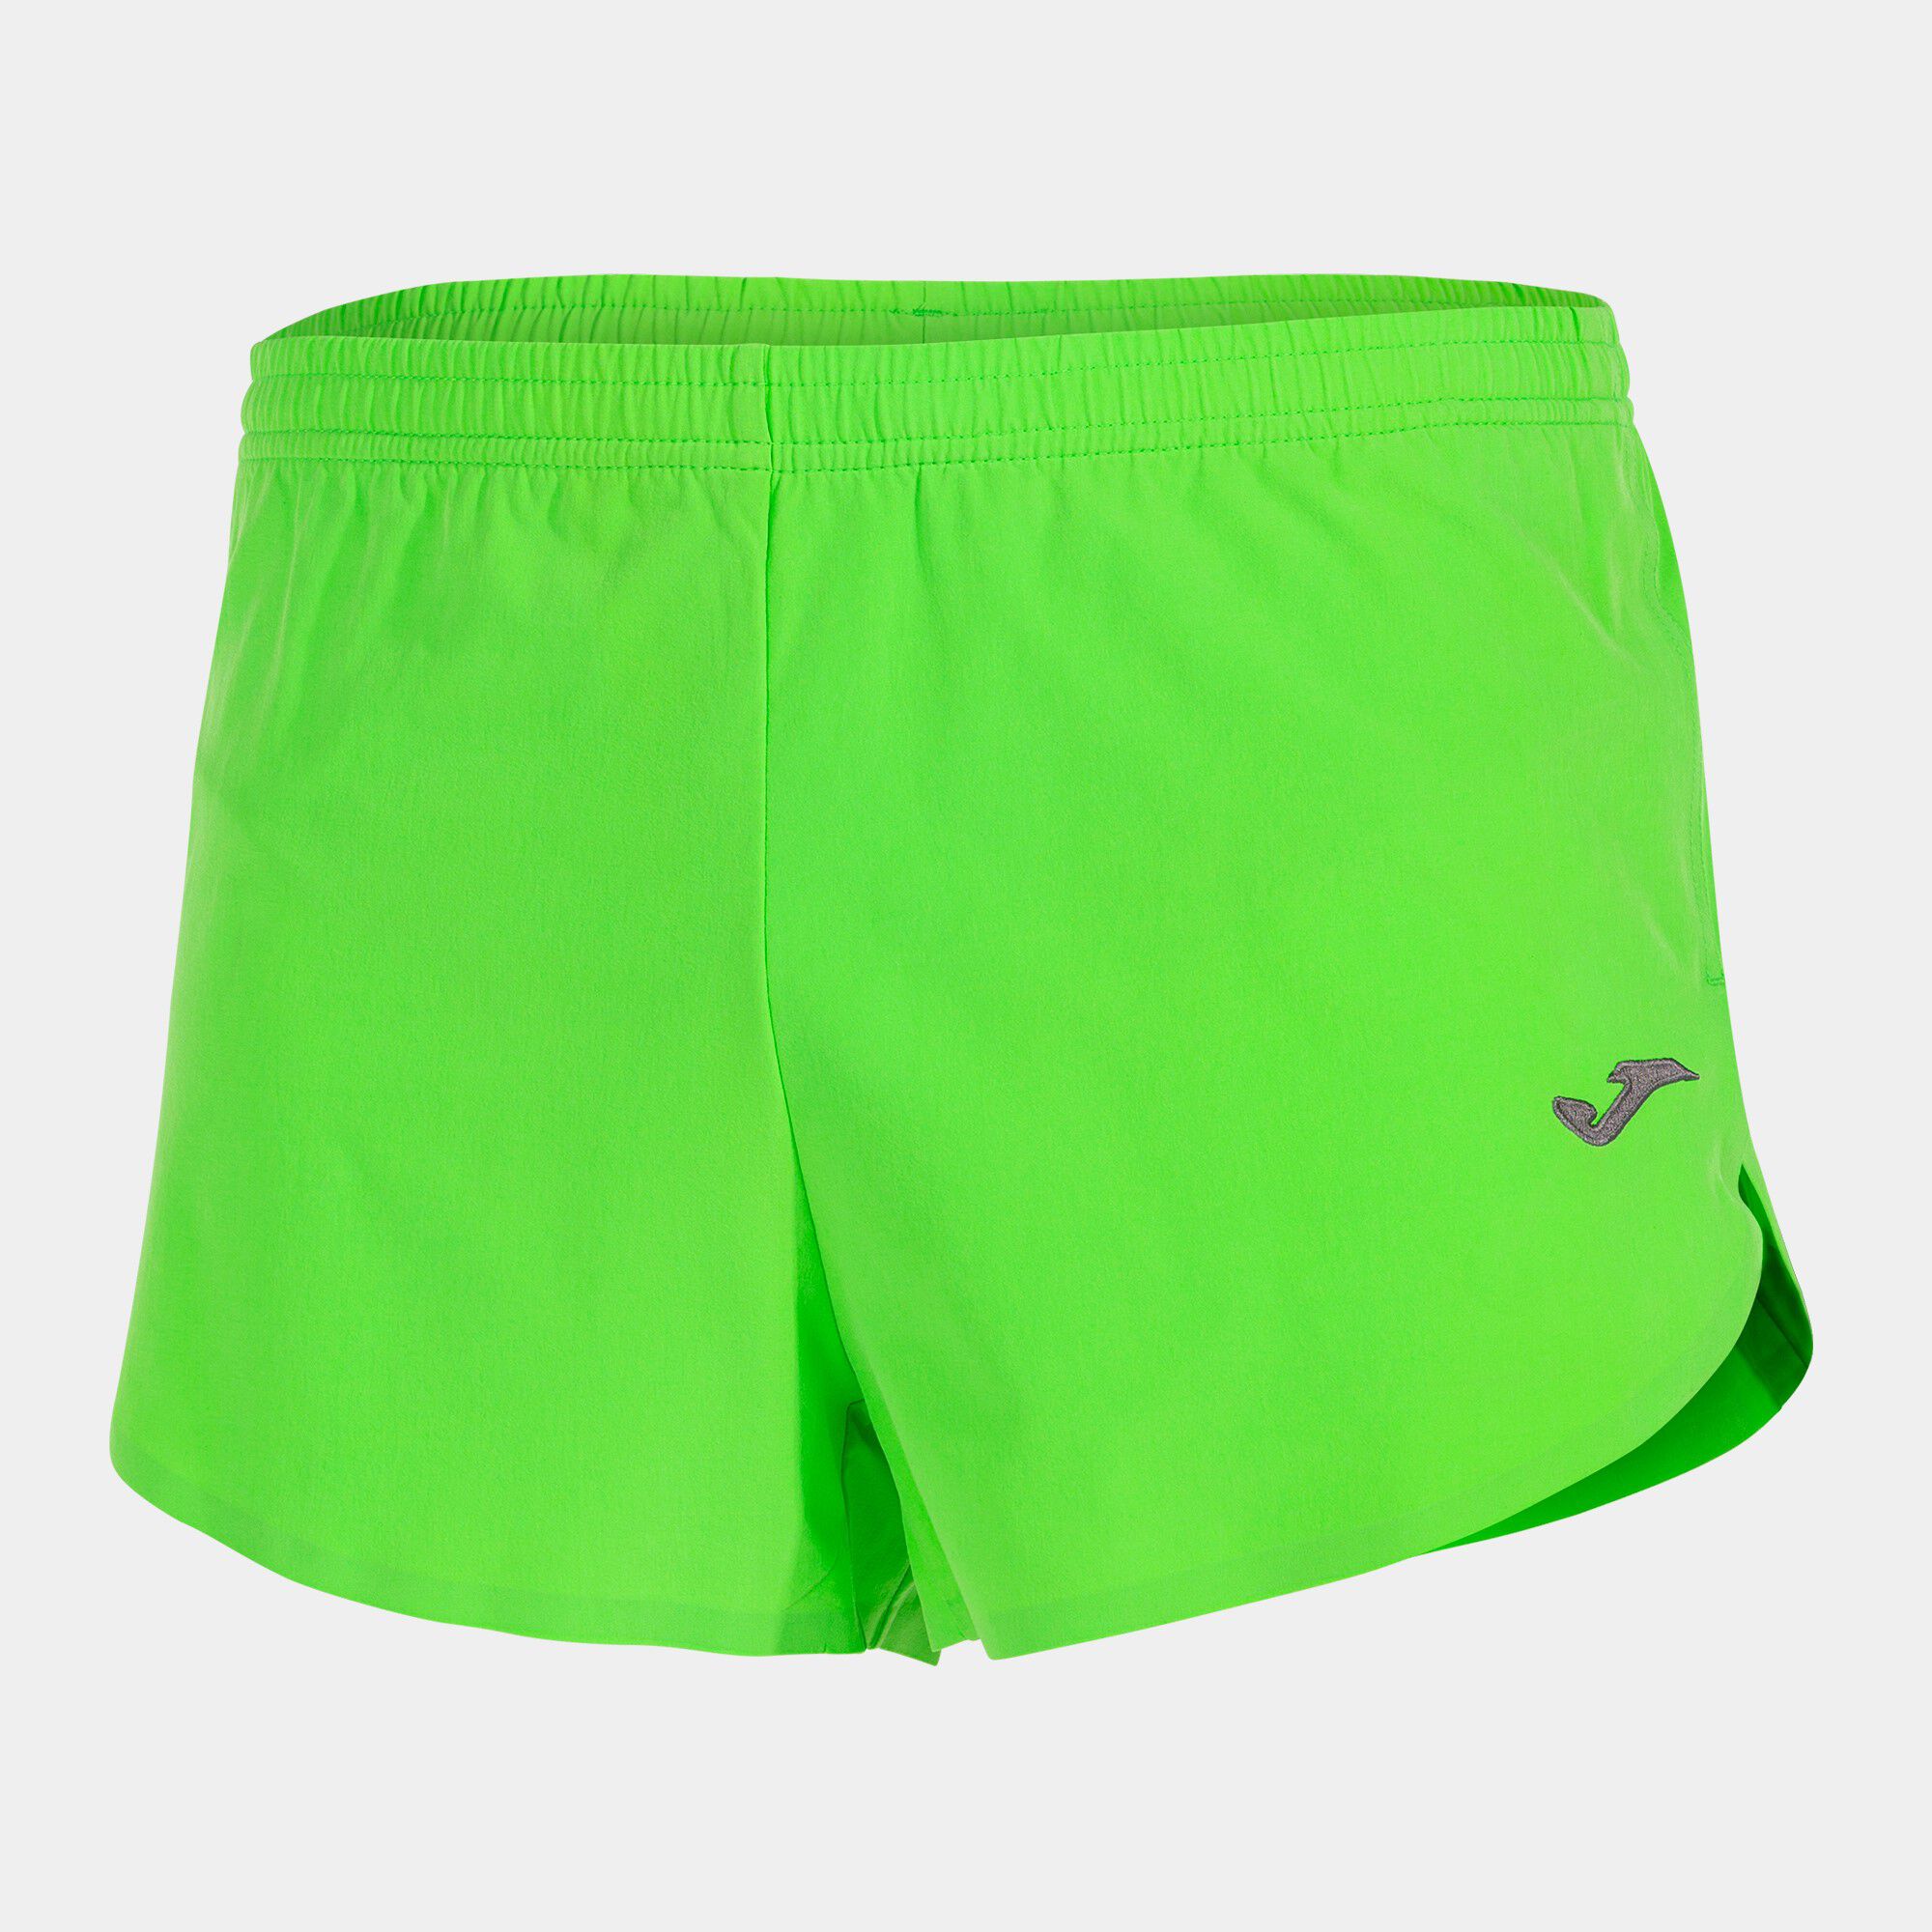 Shorts man Olimpia fluorescent green